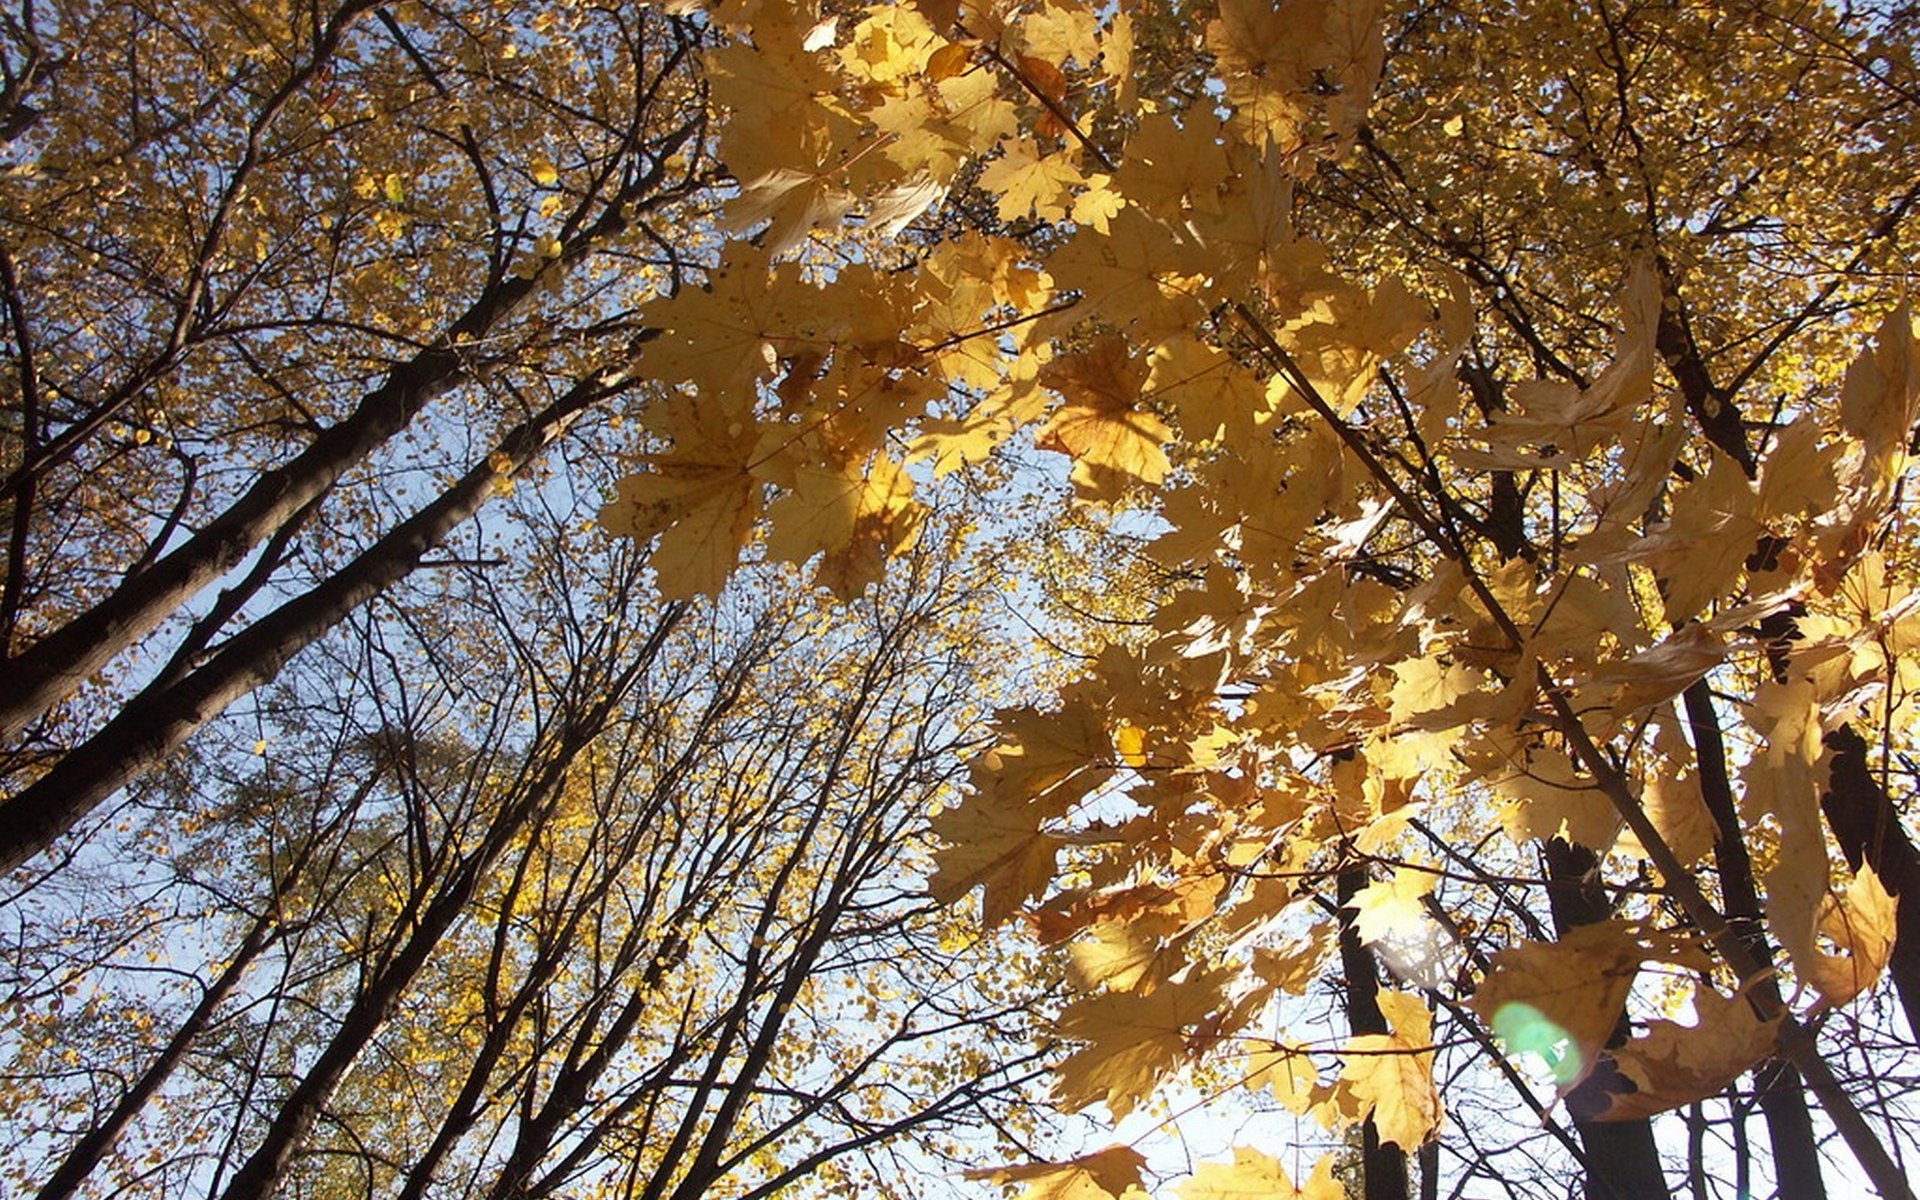 Standing under an autumn maple tree